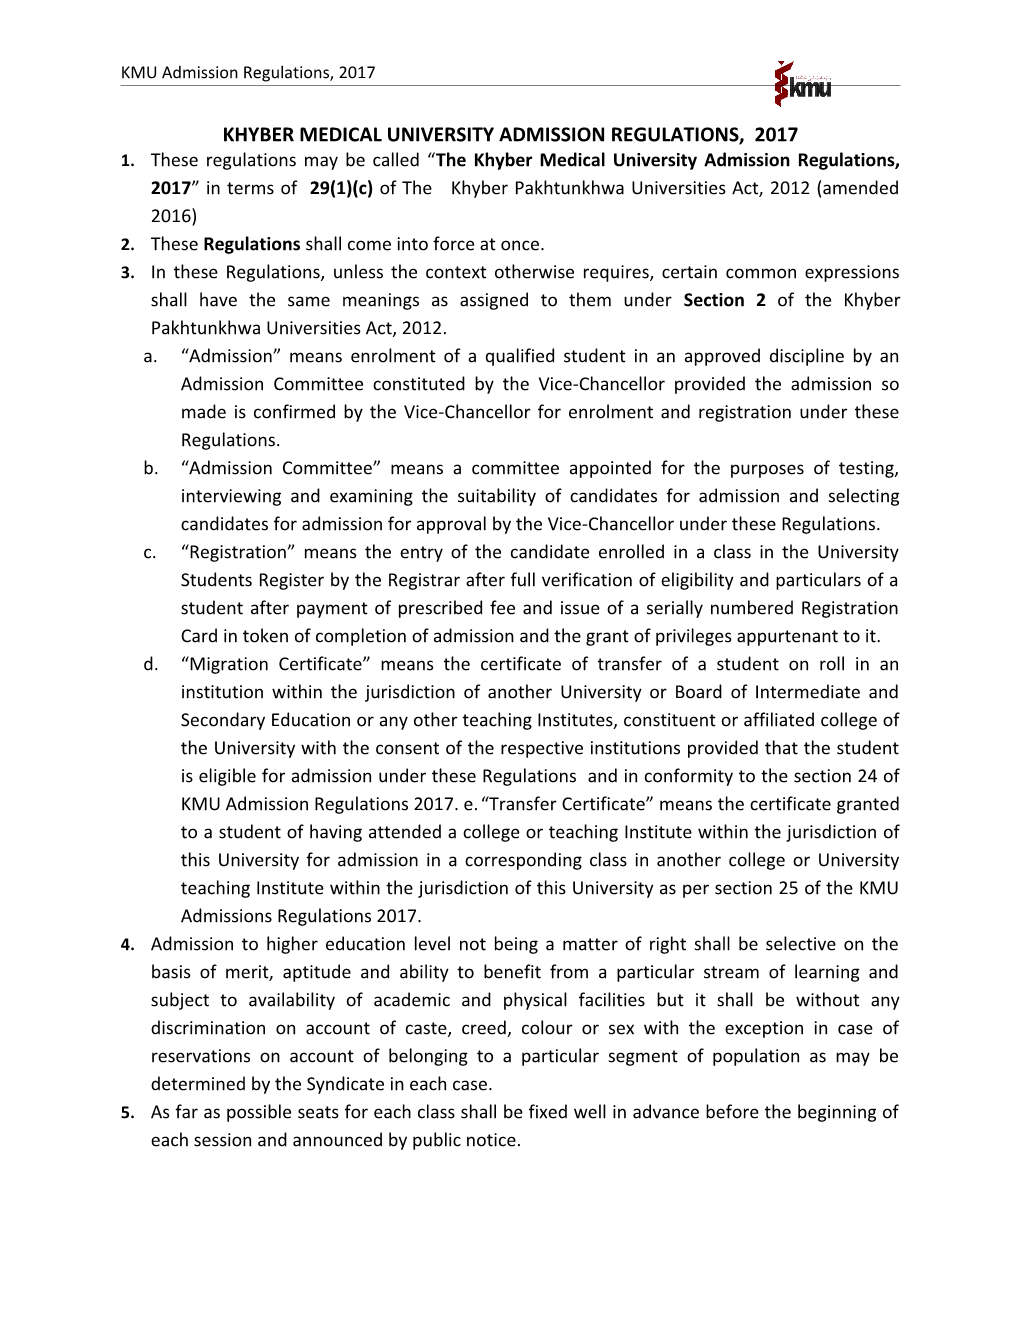 Khyber Medical University Admission Regulations, 2017